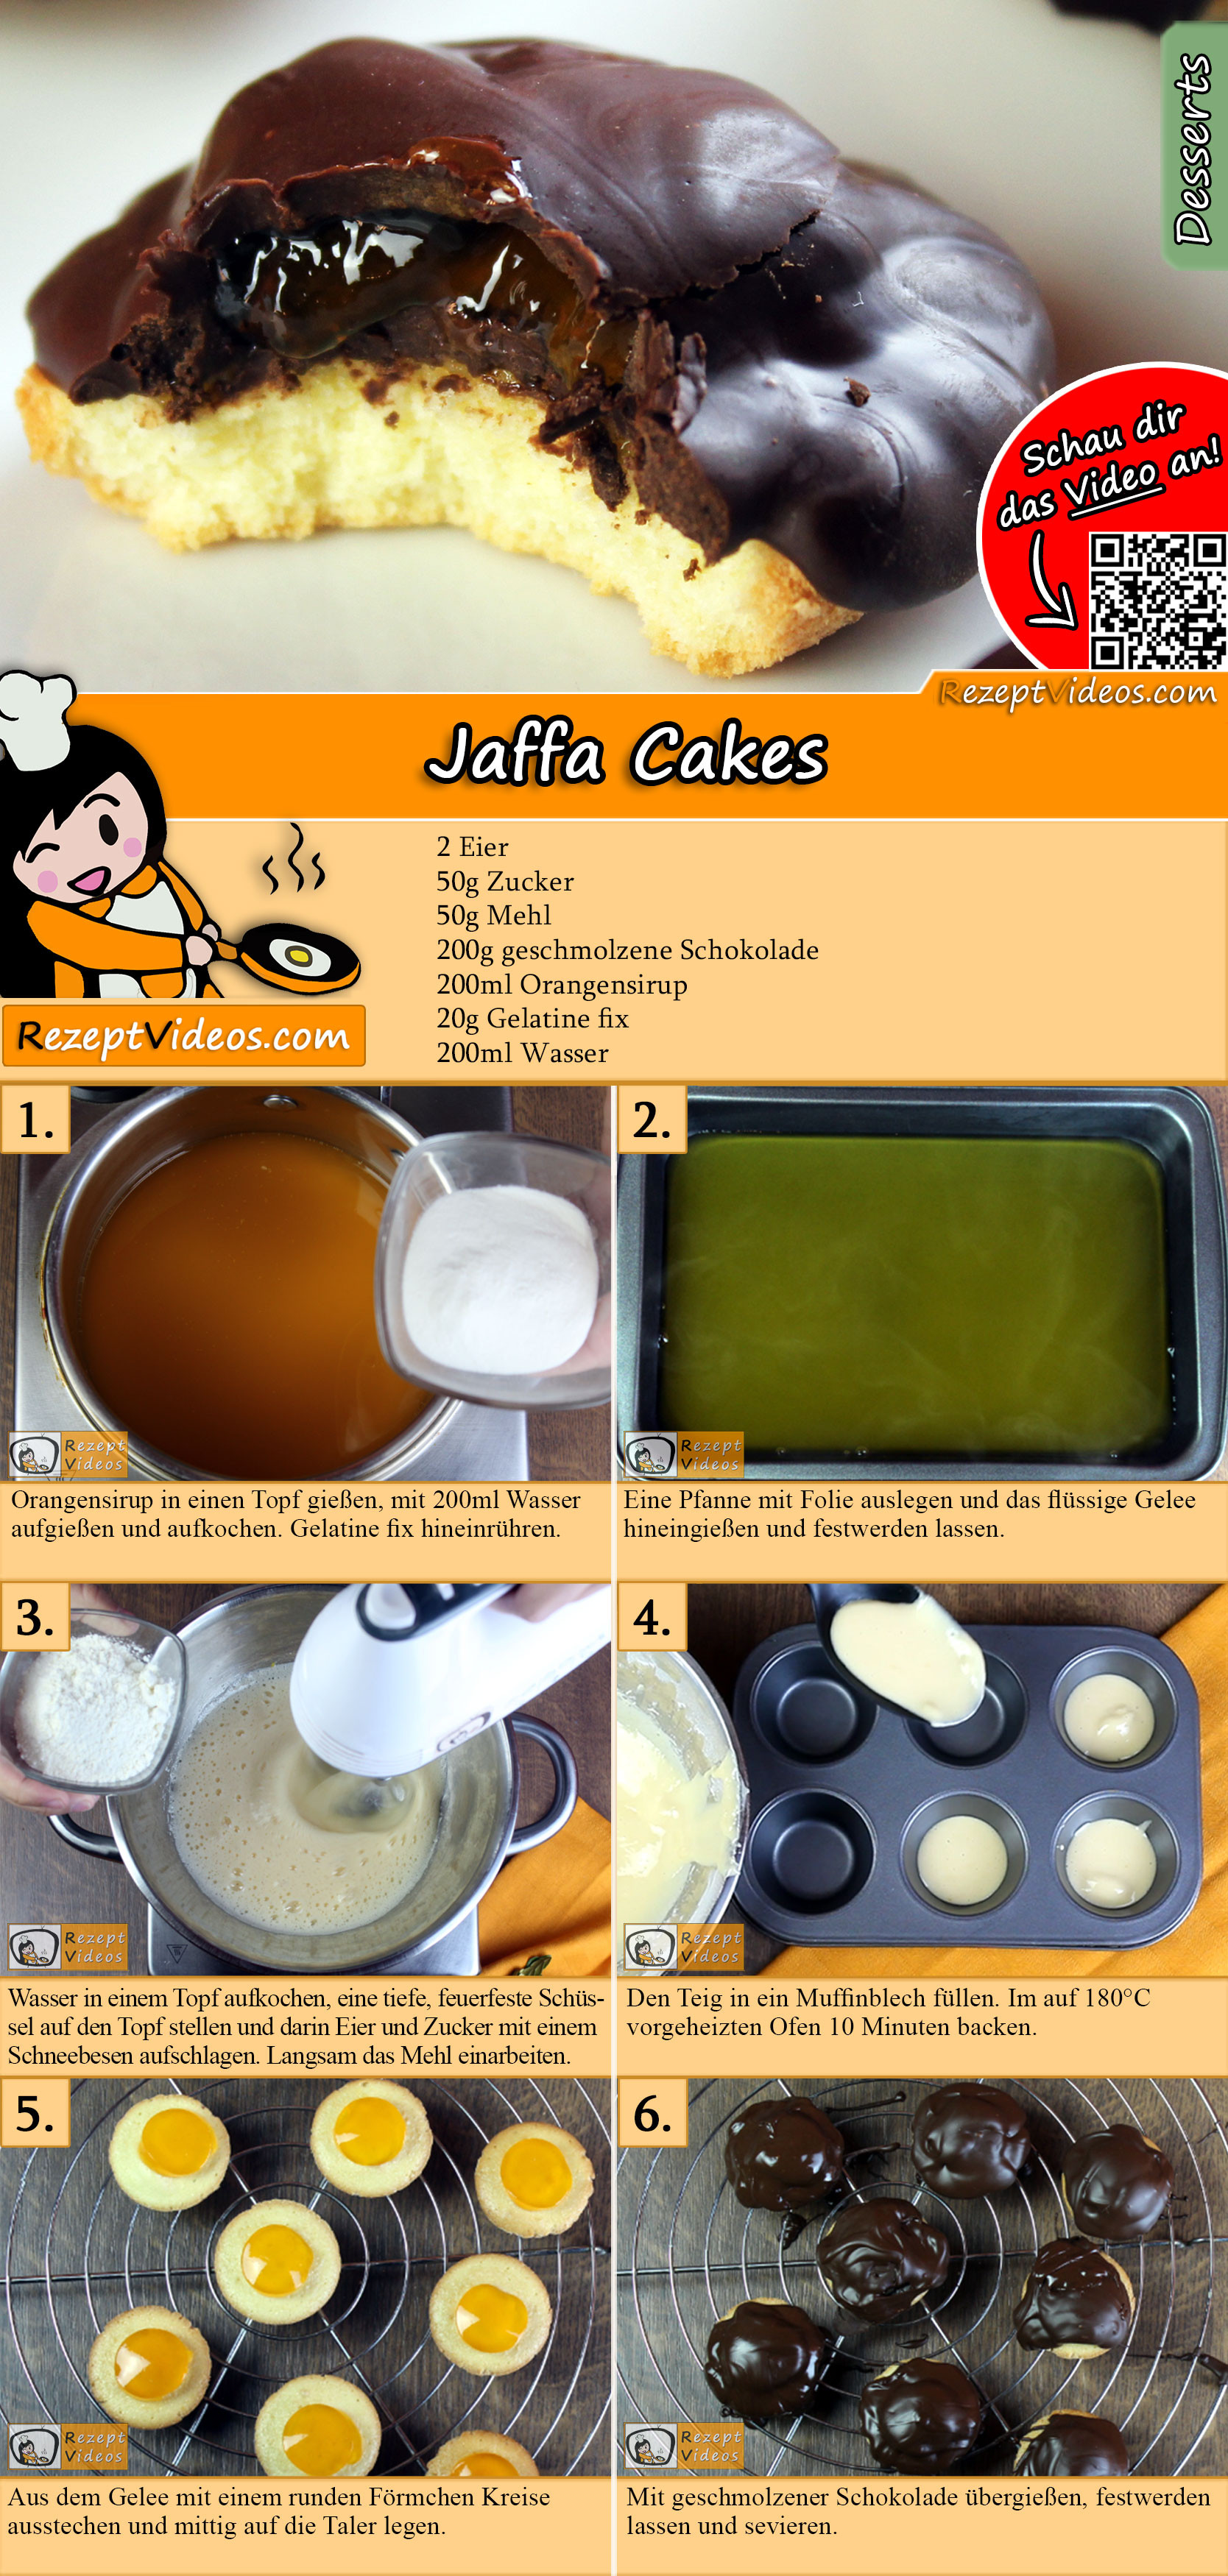 Jaffa Cakes Rezept mit Video